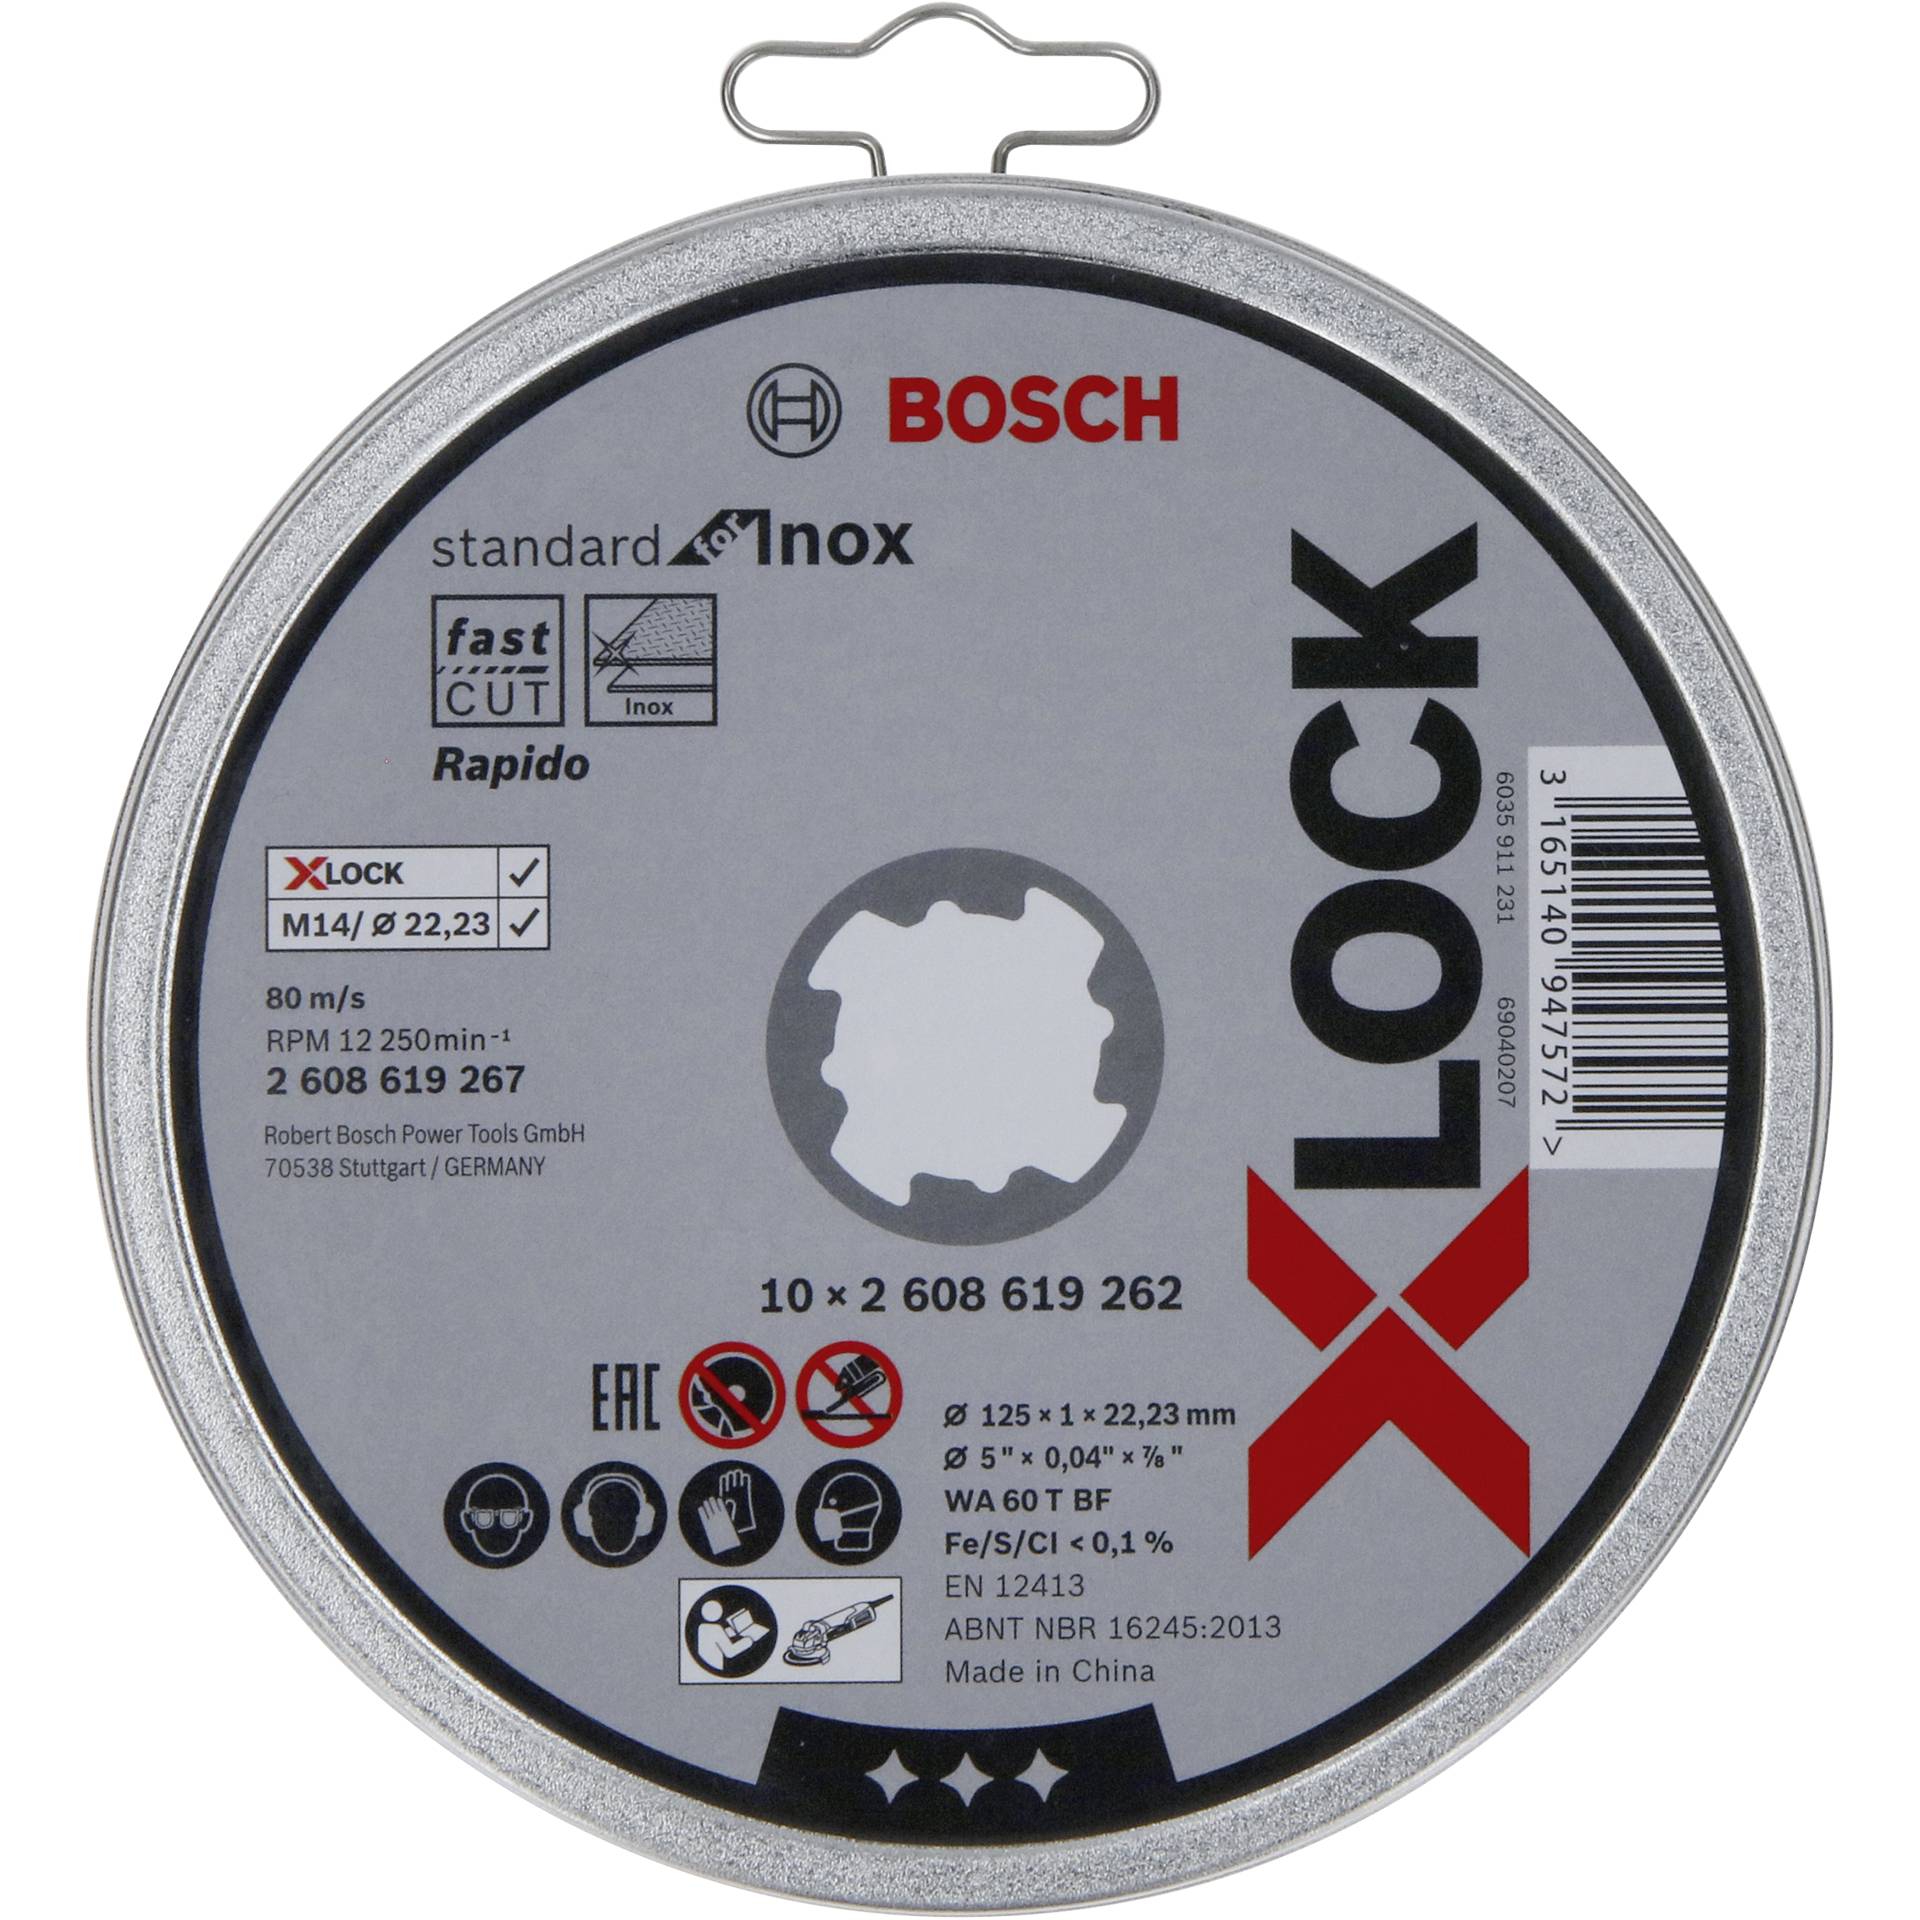 Bosch X-LOCK Trennscheibe Dose 125mmStandard for Inox VPE 10STK Schneidedisk